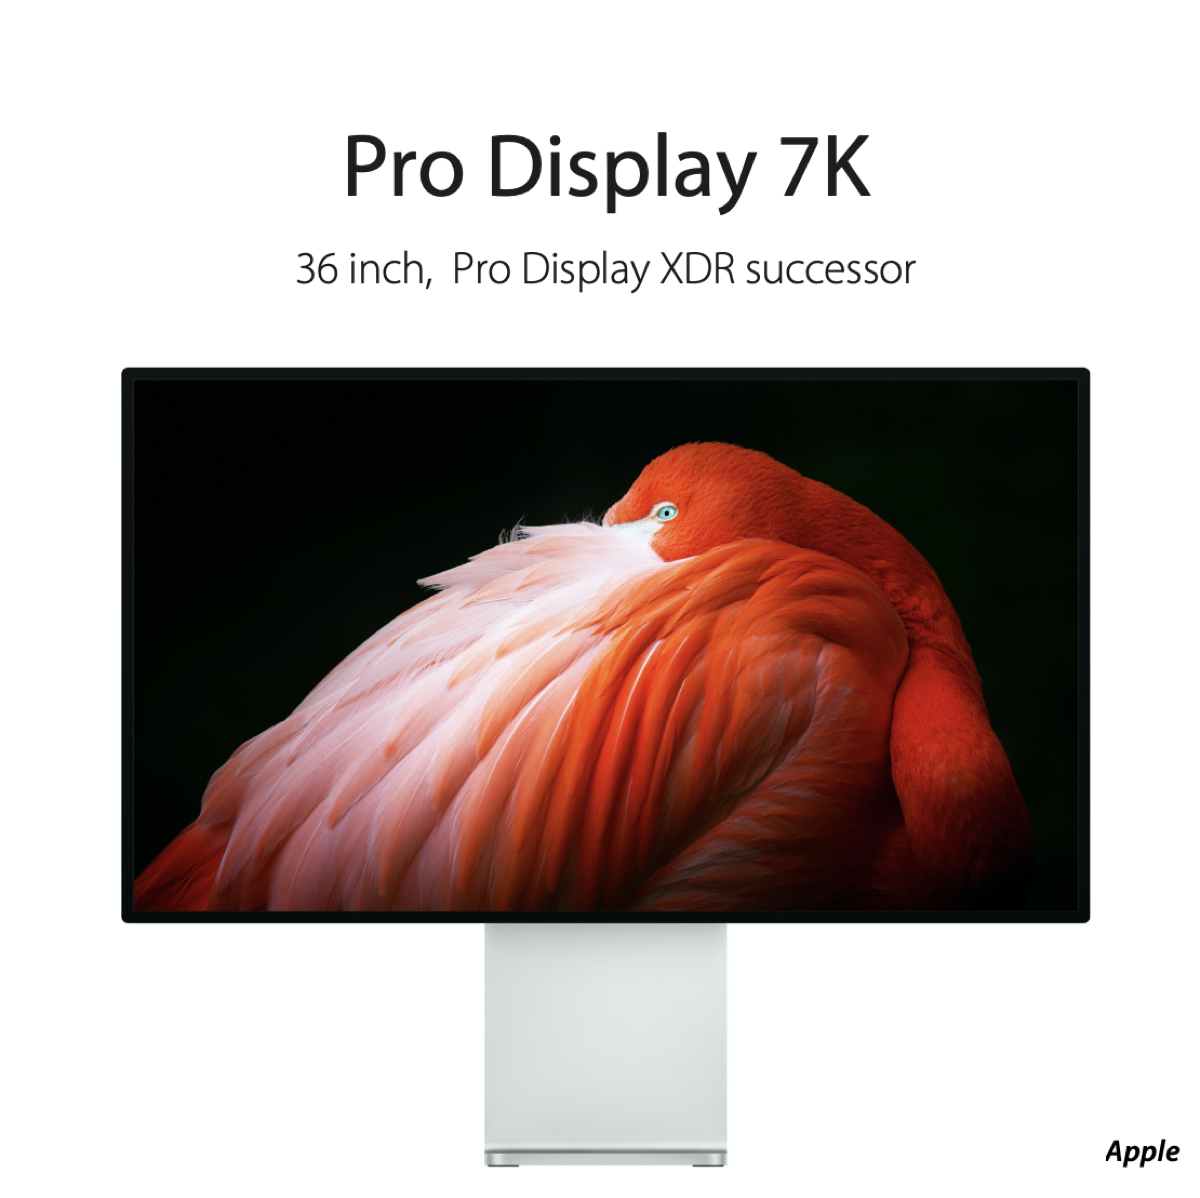 Pro Display 7K